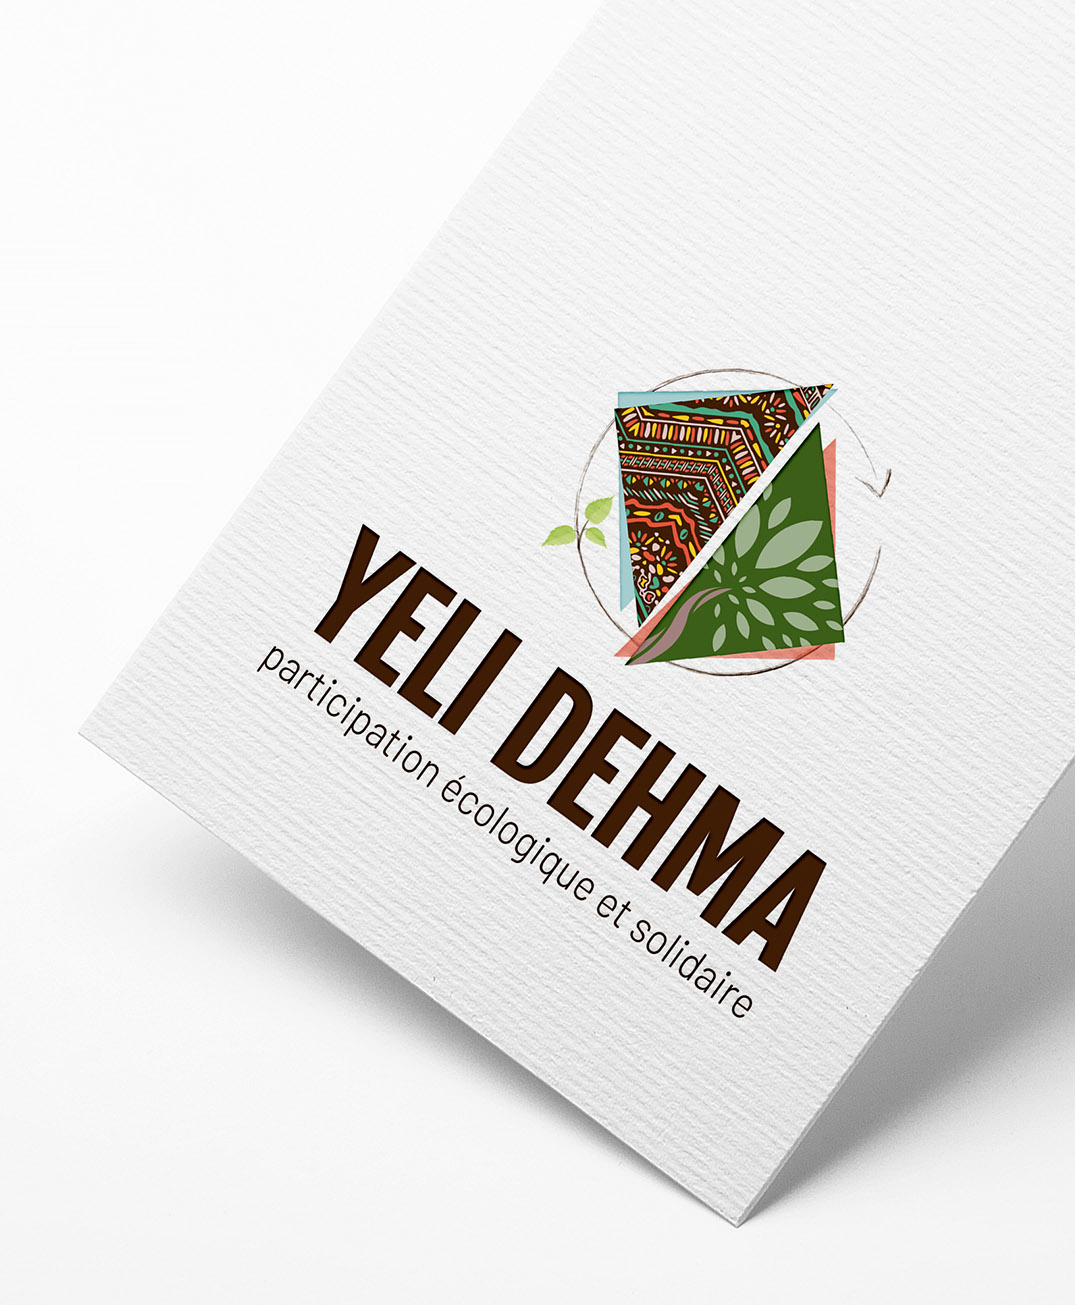 Yeli Dehma